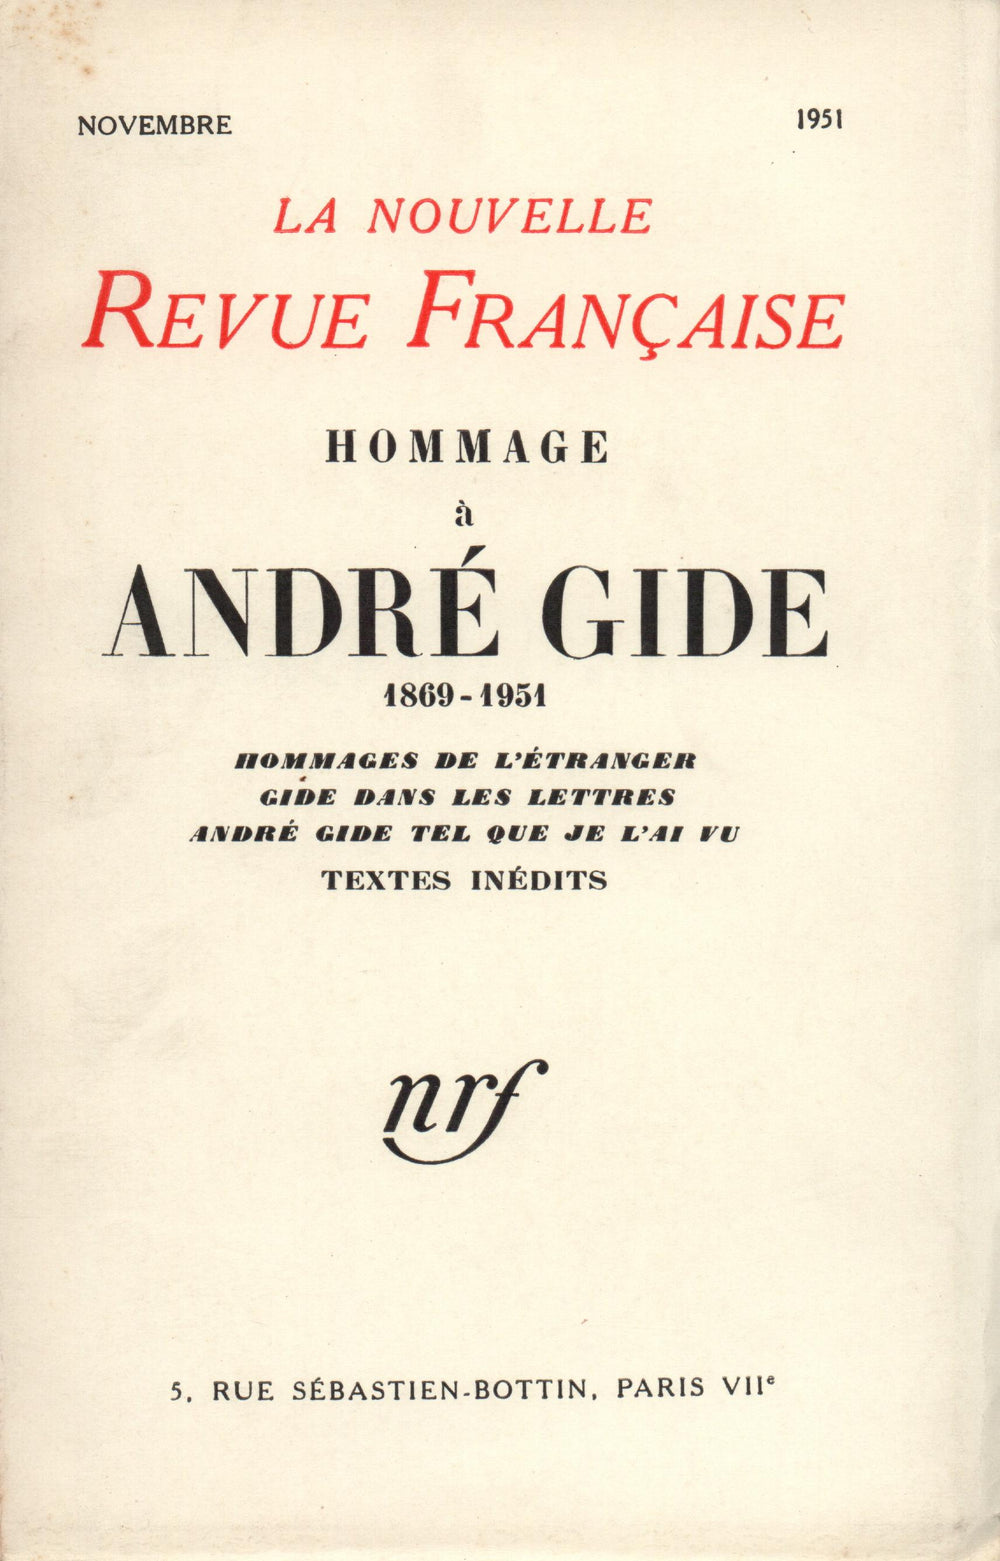 Hommage ŕ André Gide N' (Novembre 1951)